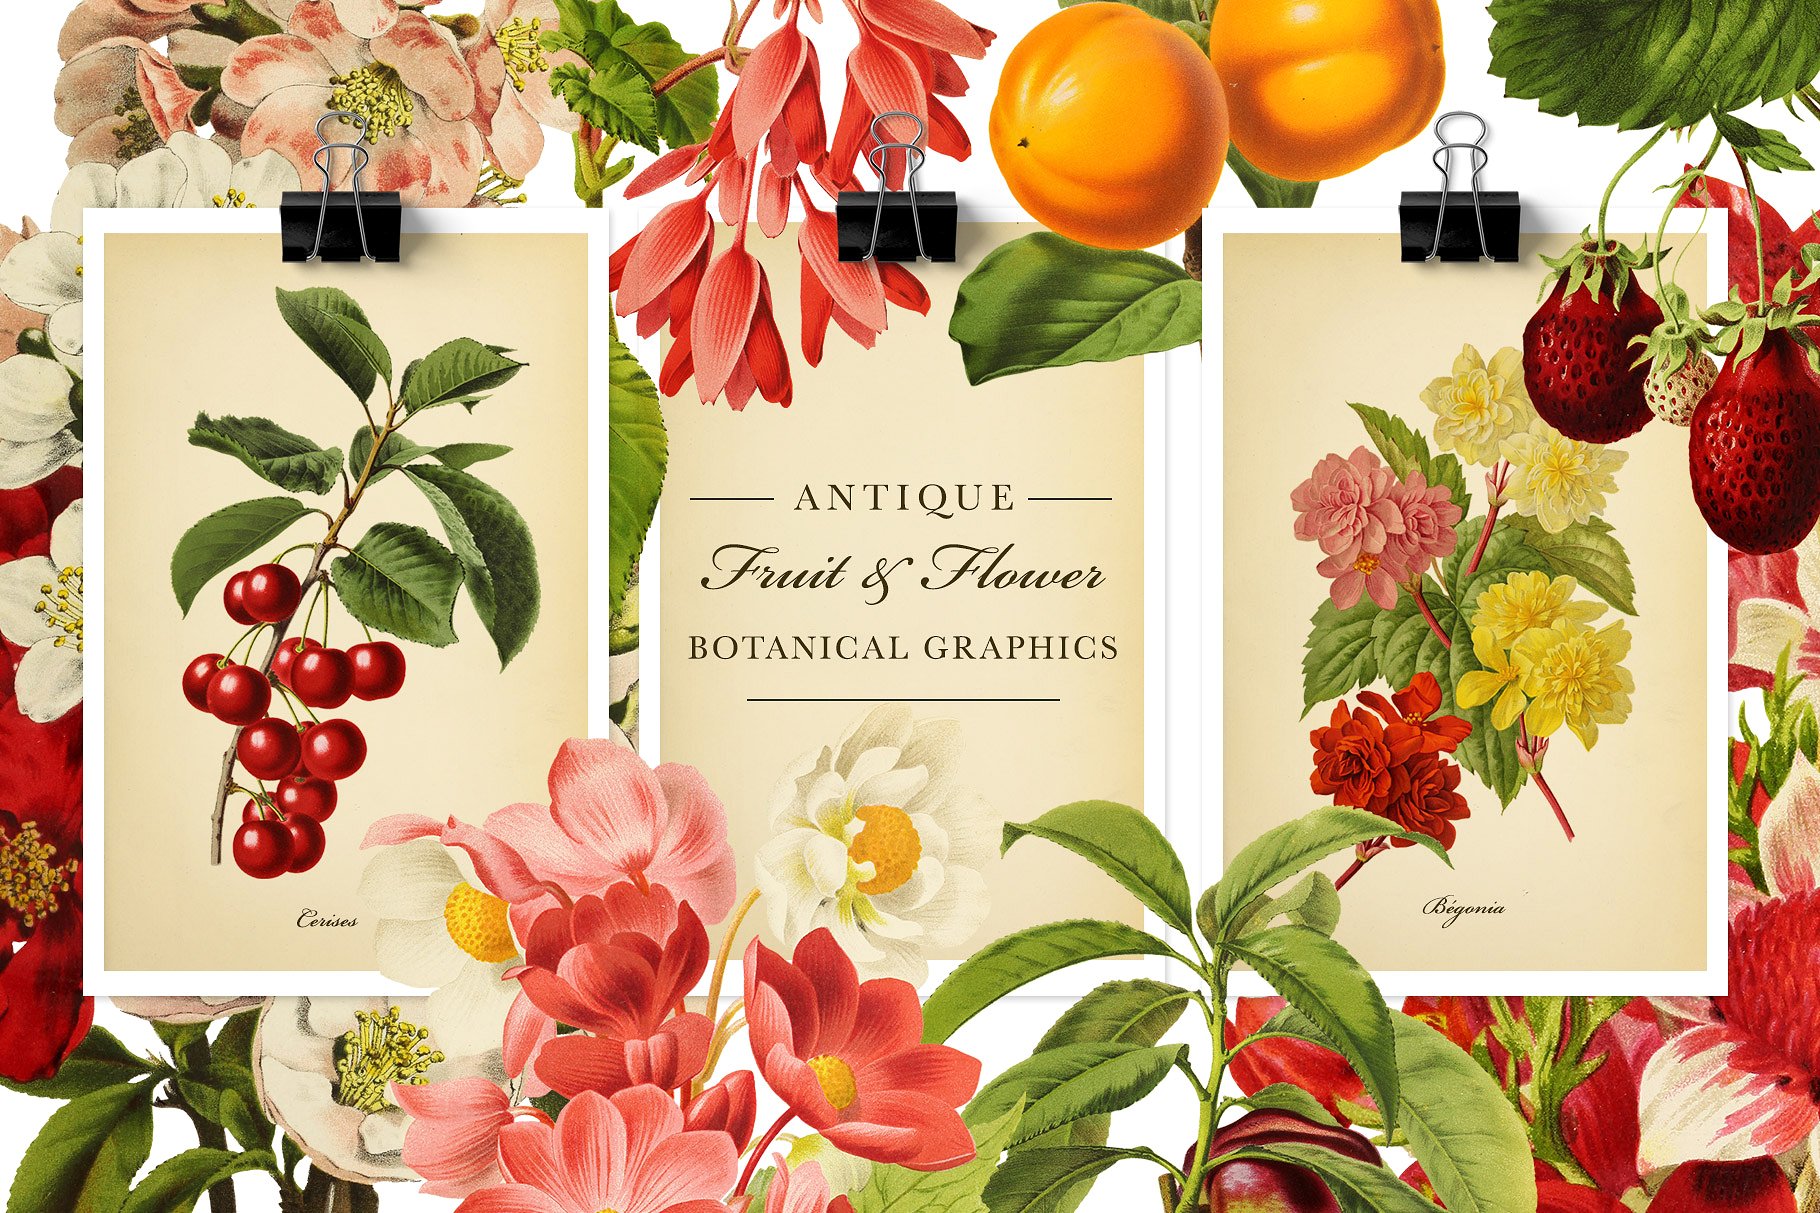 复古风格水果&花卉剪贴画素材 Antique Fruit & Flowers Graphics插图